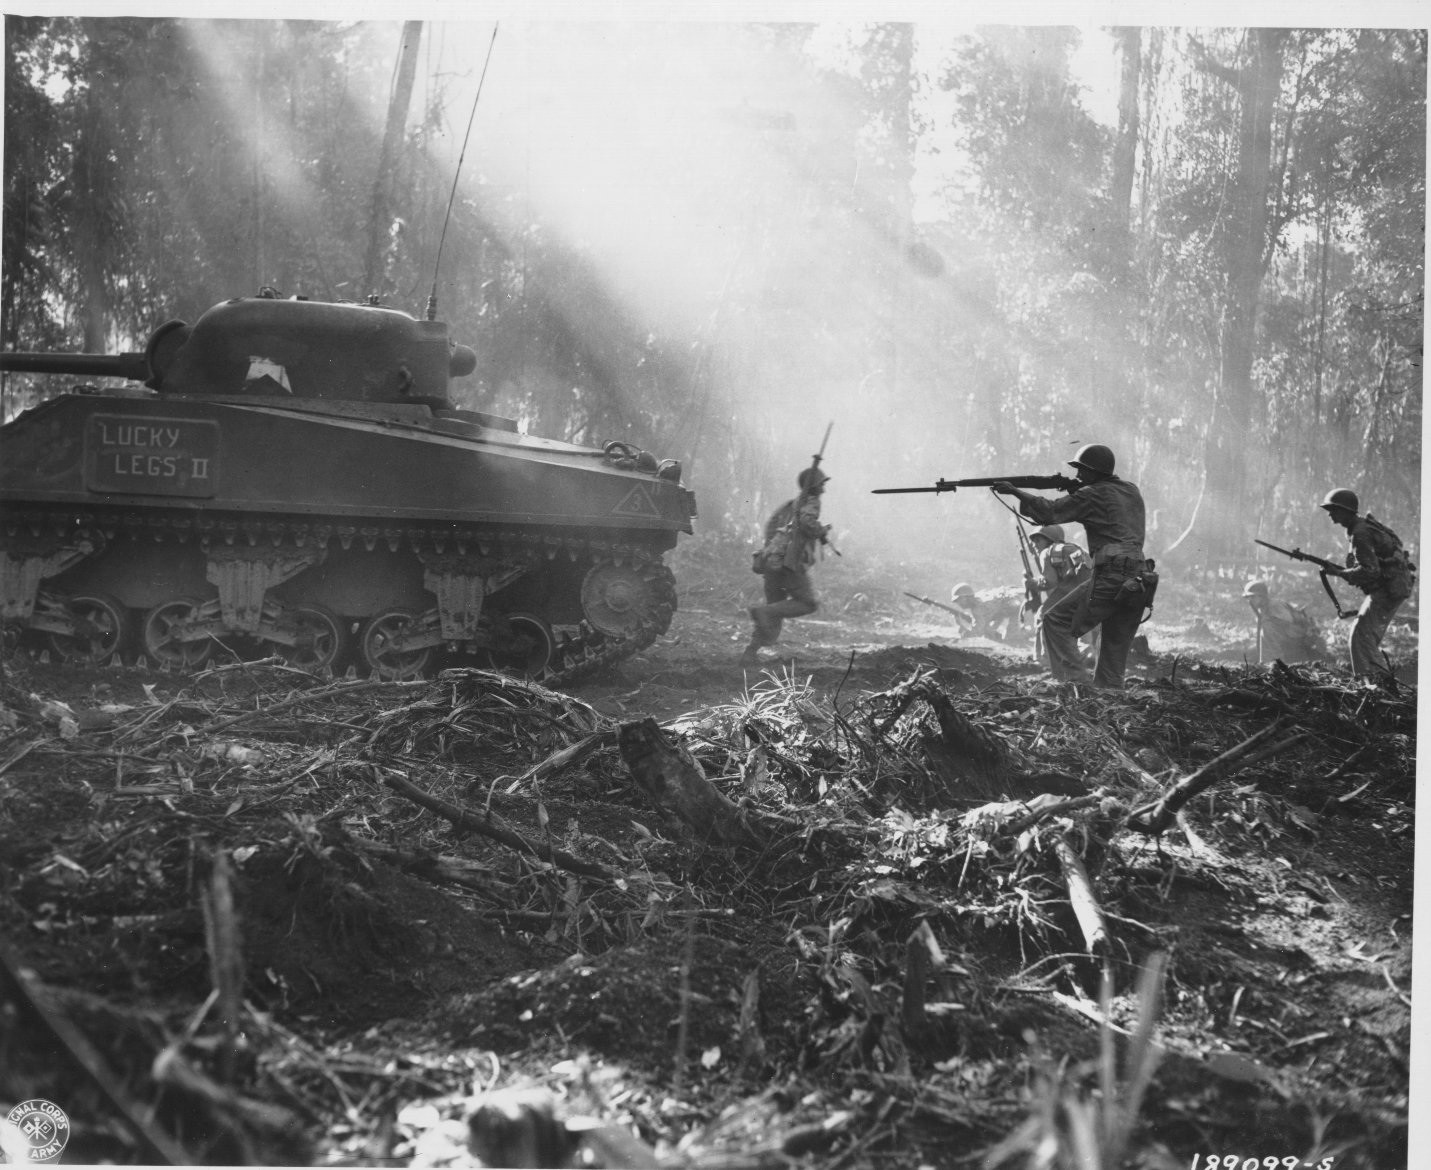 General 1431x1170 military army vintage tank soldier World War II military vehicle vehicle war